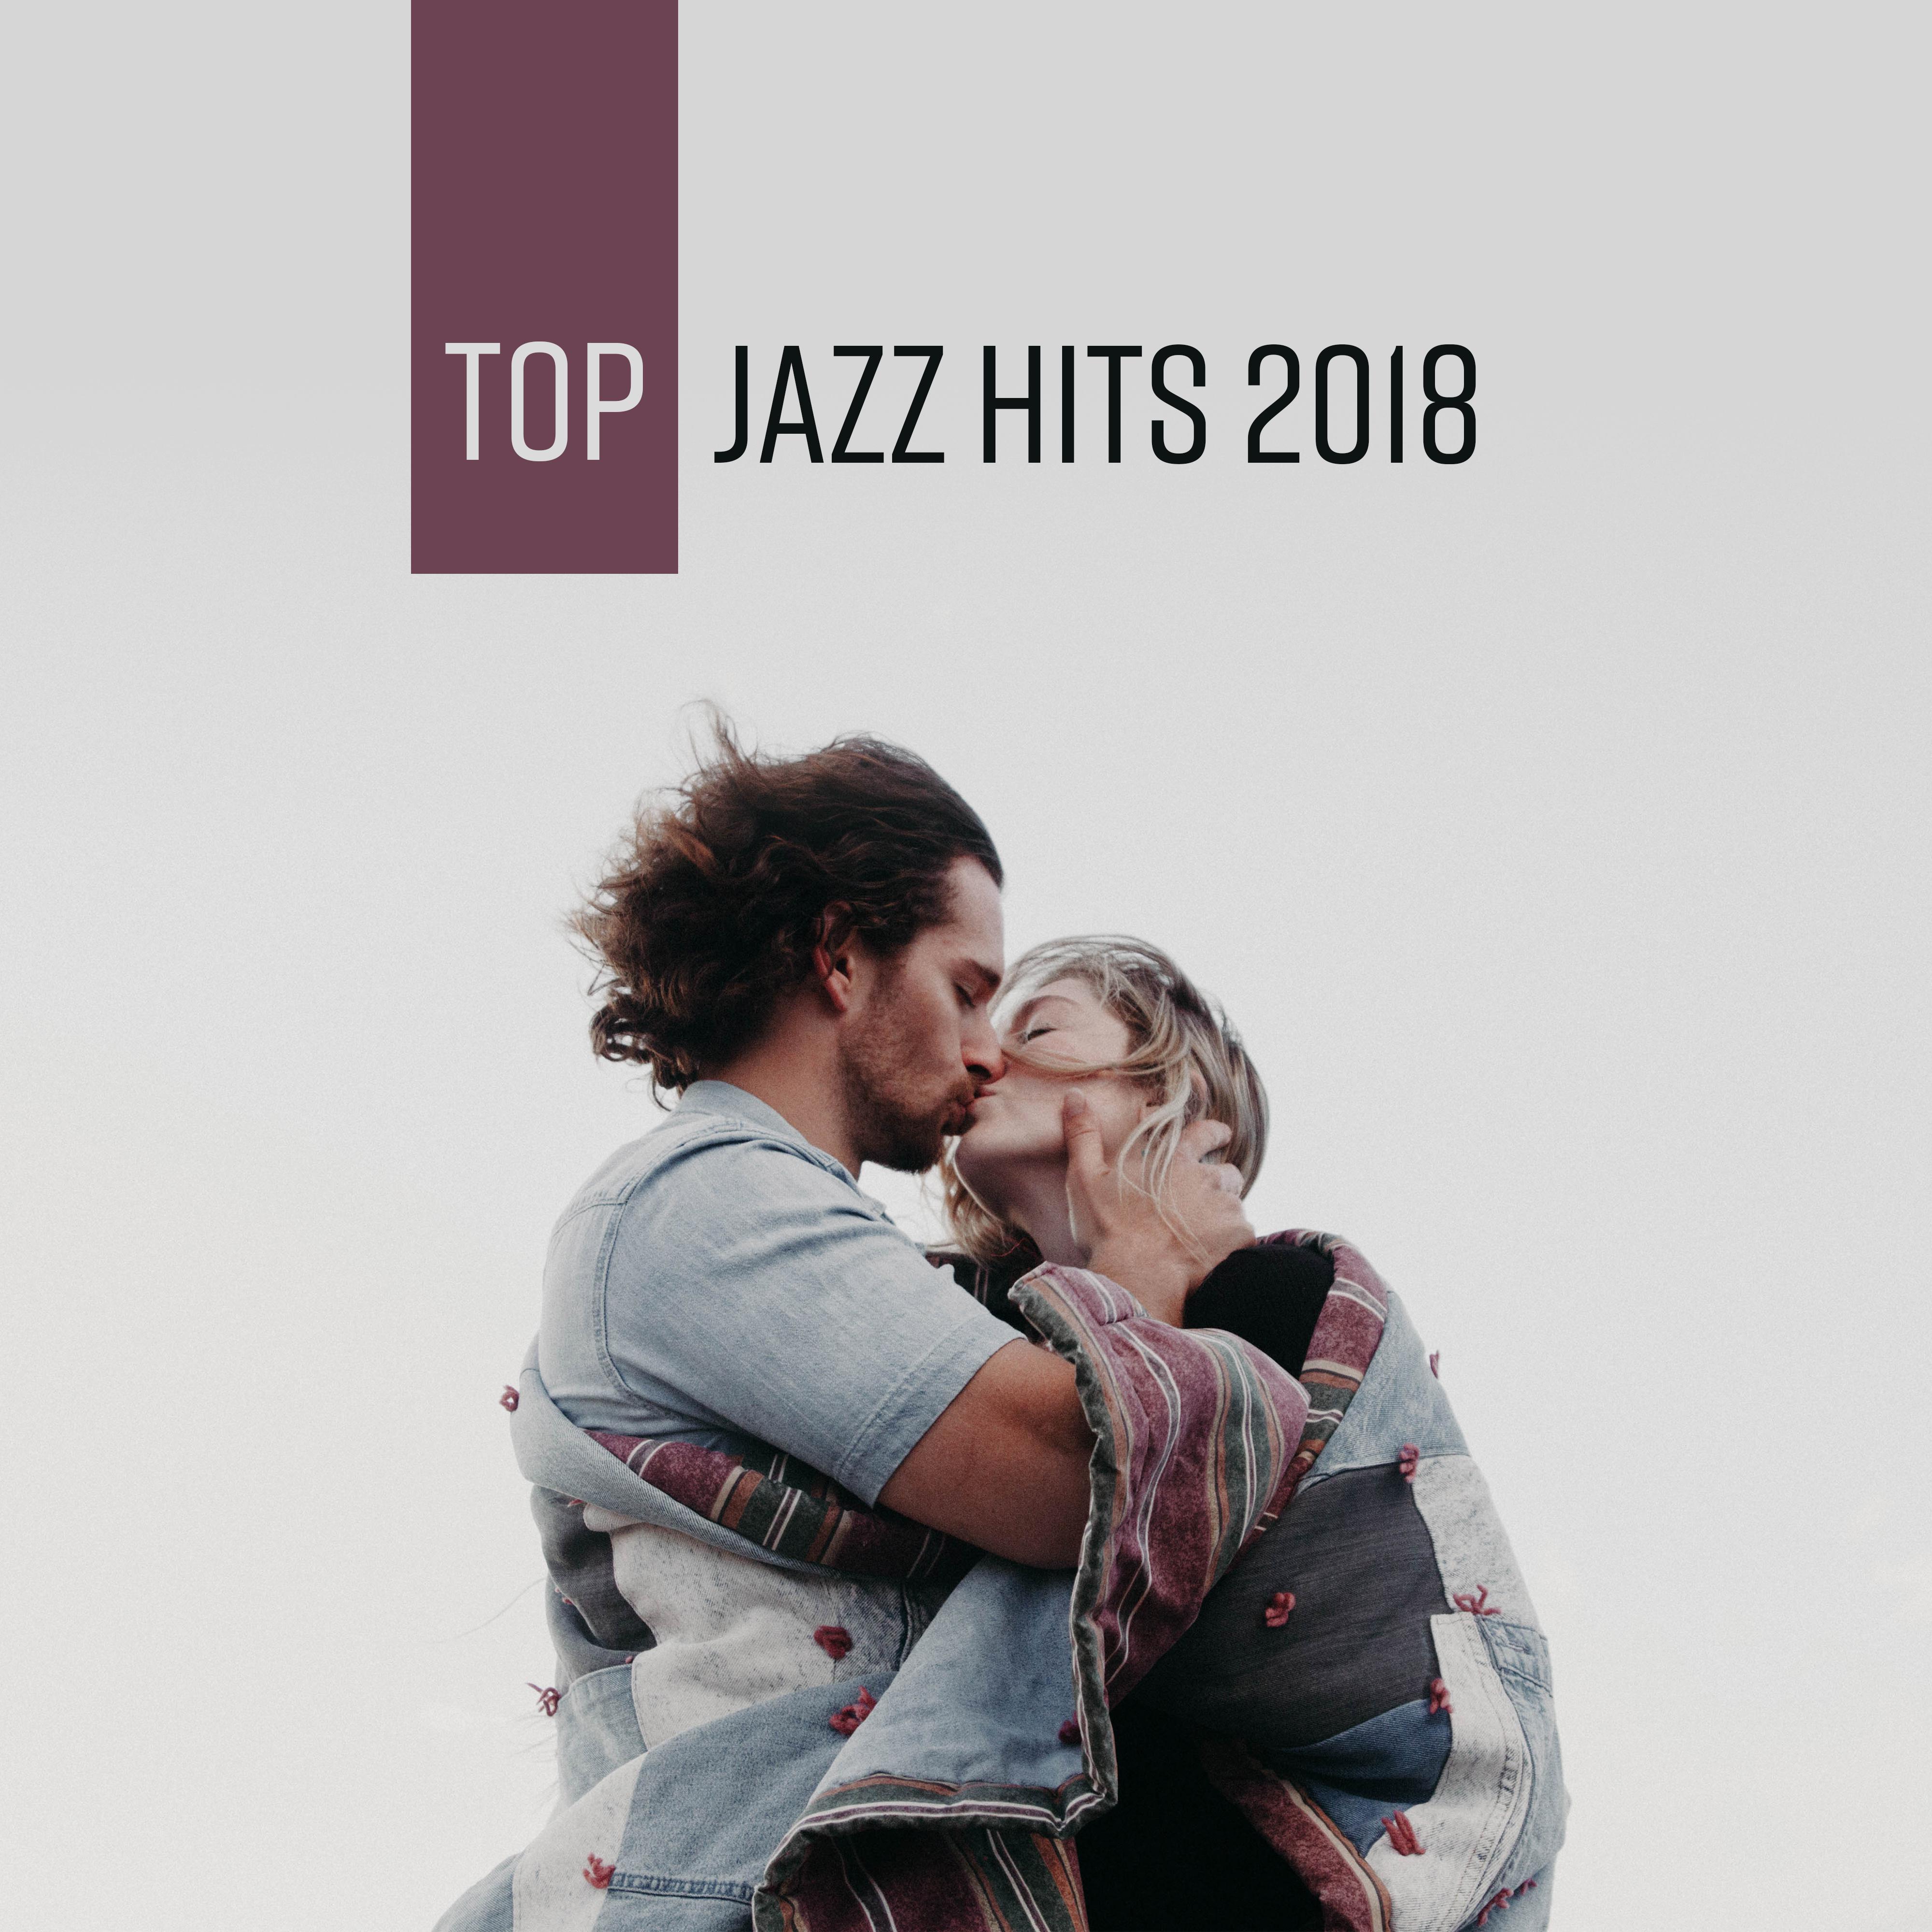 Top Jazz Hits 2018